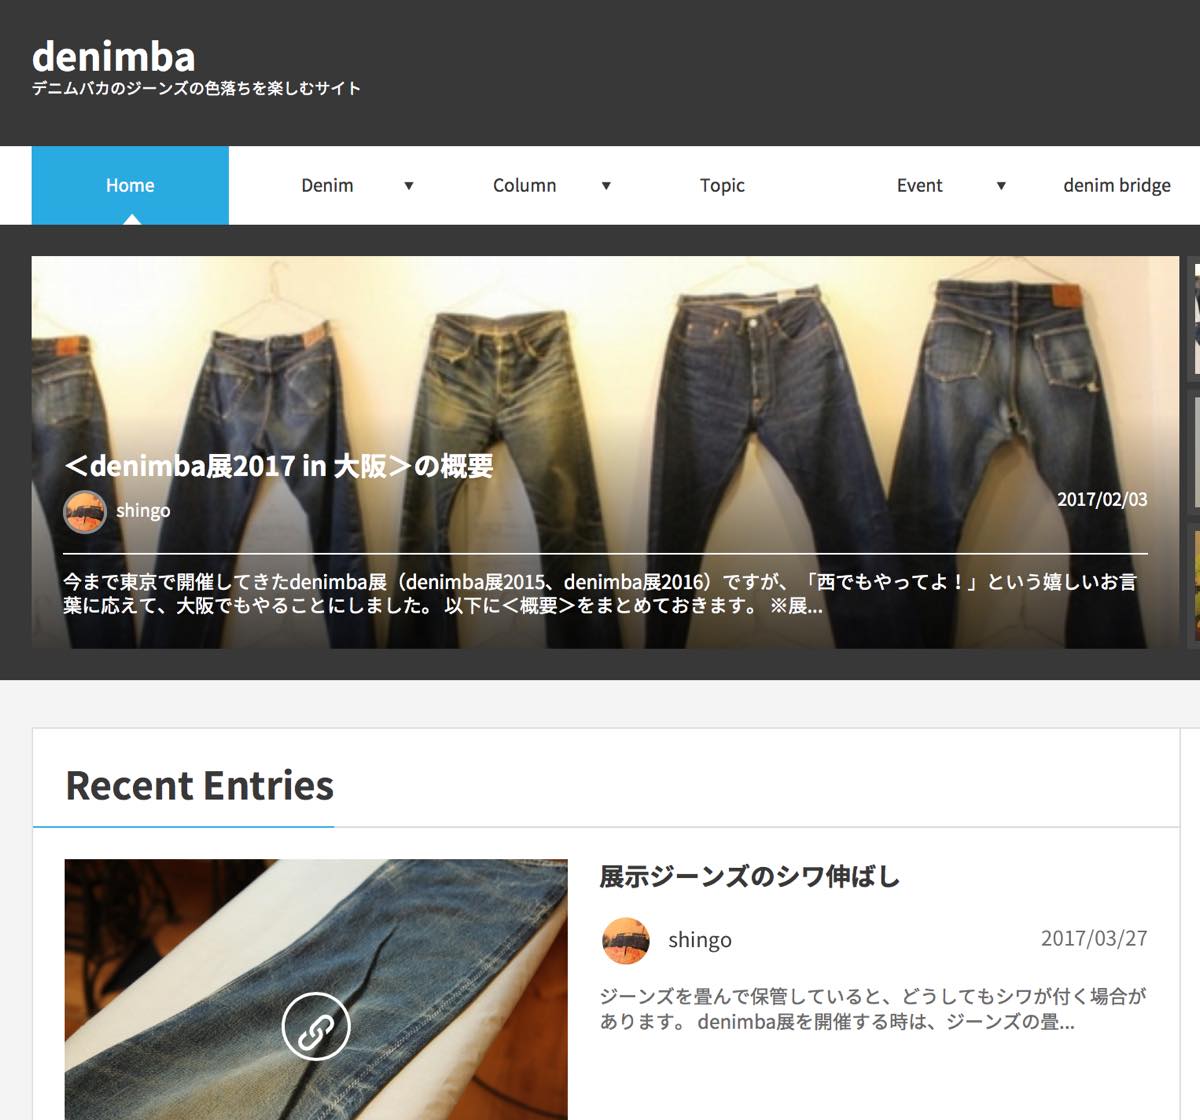 denimba.com